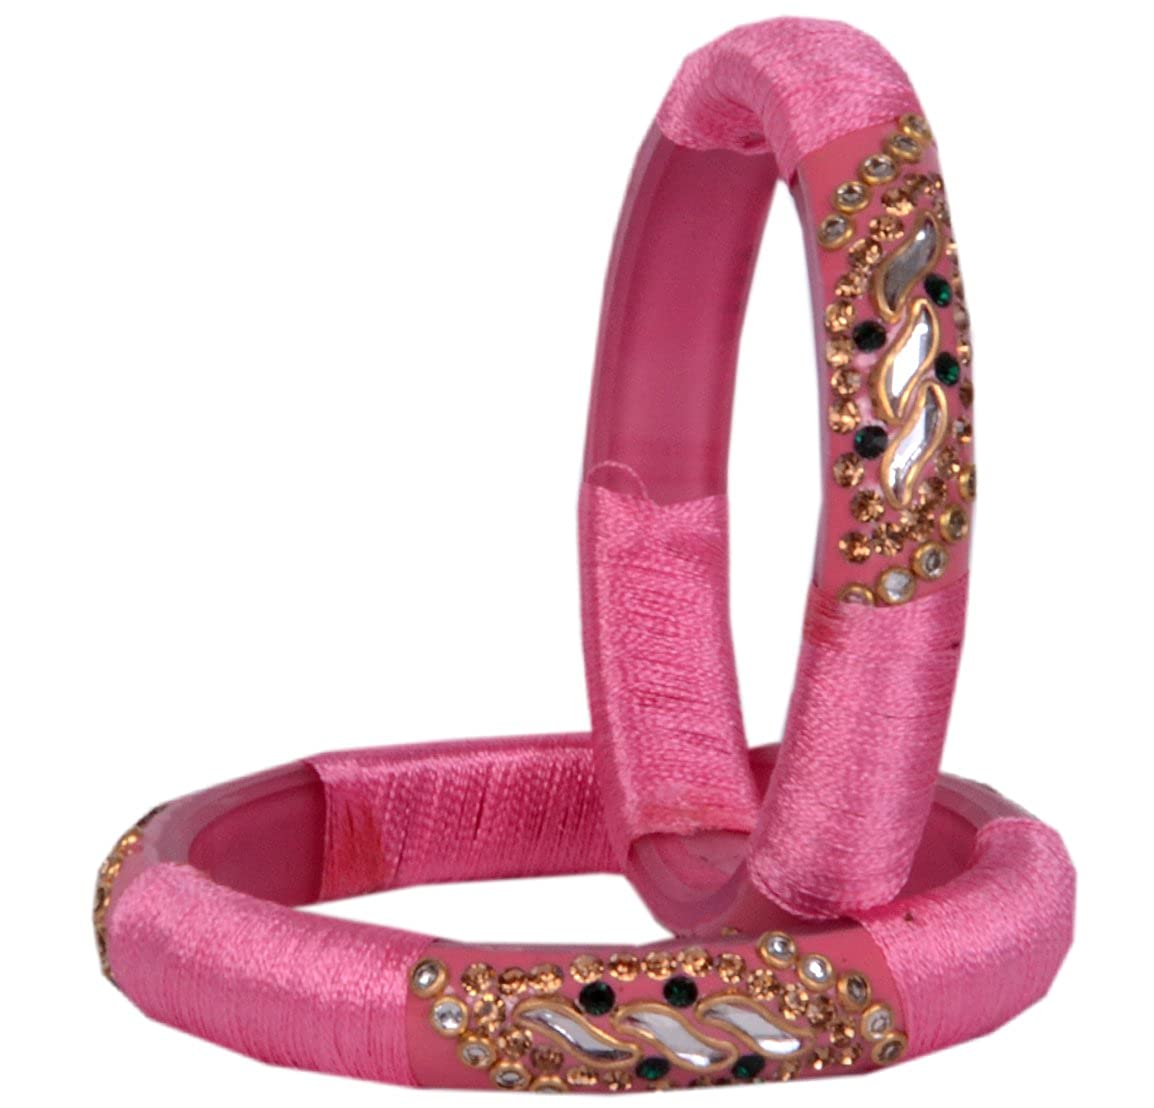 sukriti stylish designer pink silk thread acrylic bangles for girls, women - set of 2